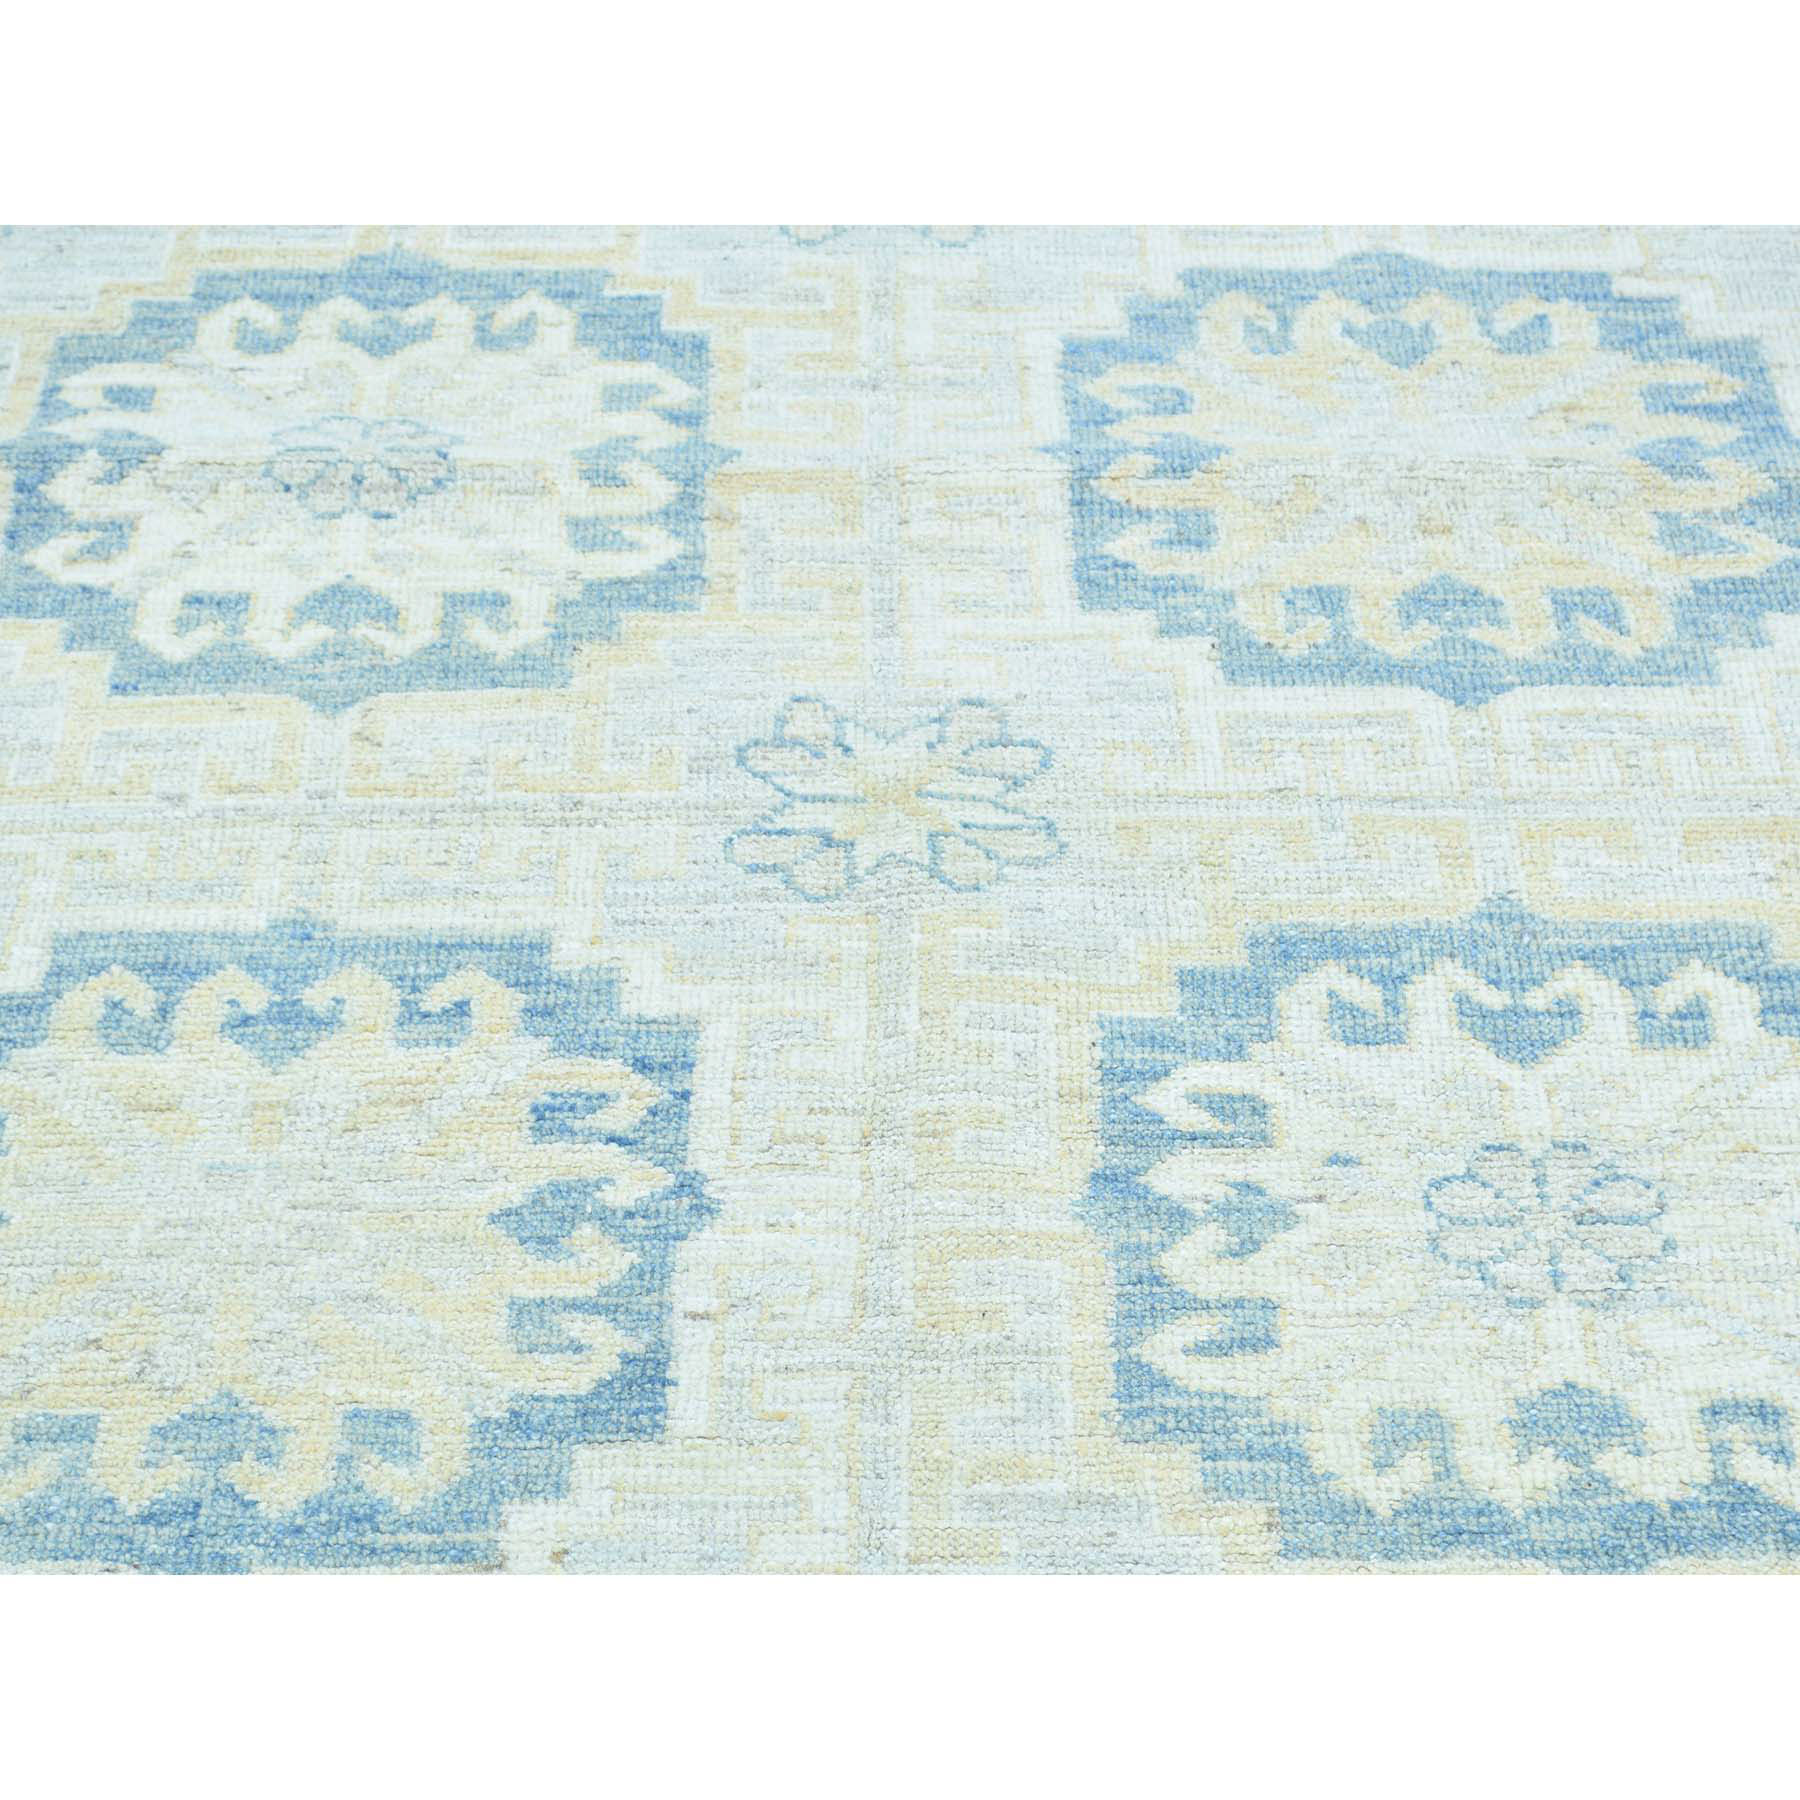 13'1"x17'7" White Wash Khotan Design Hand Woven Oriental Carpet 